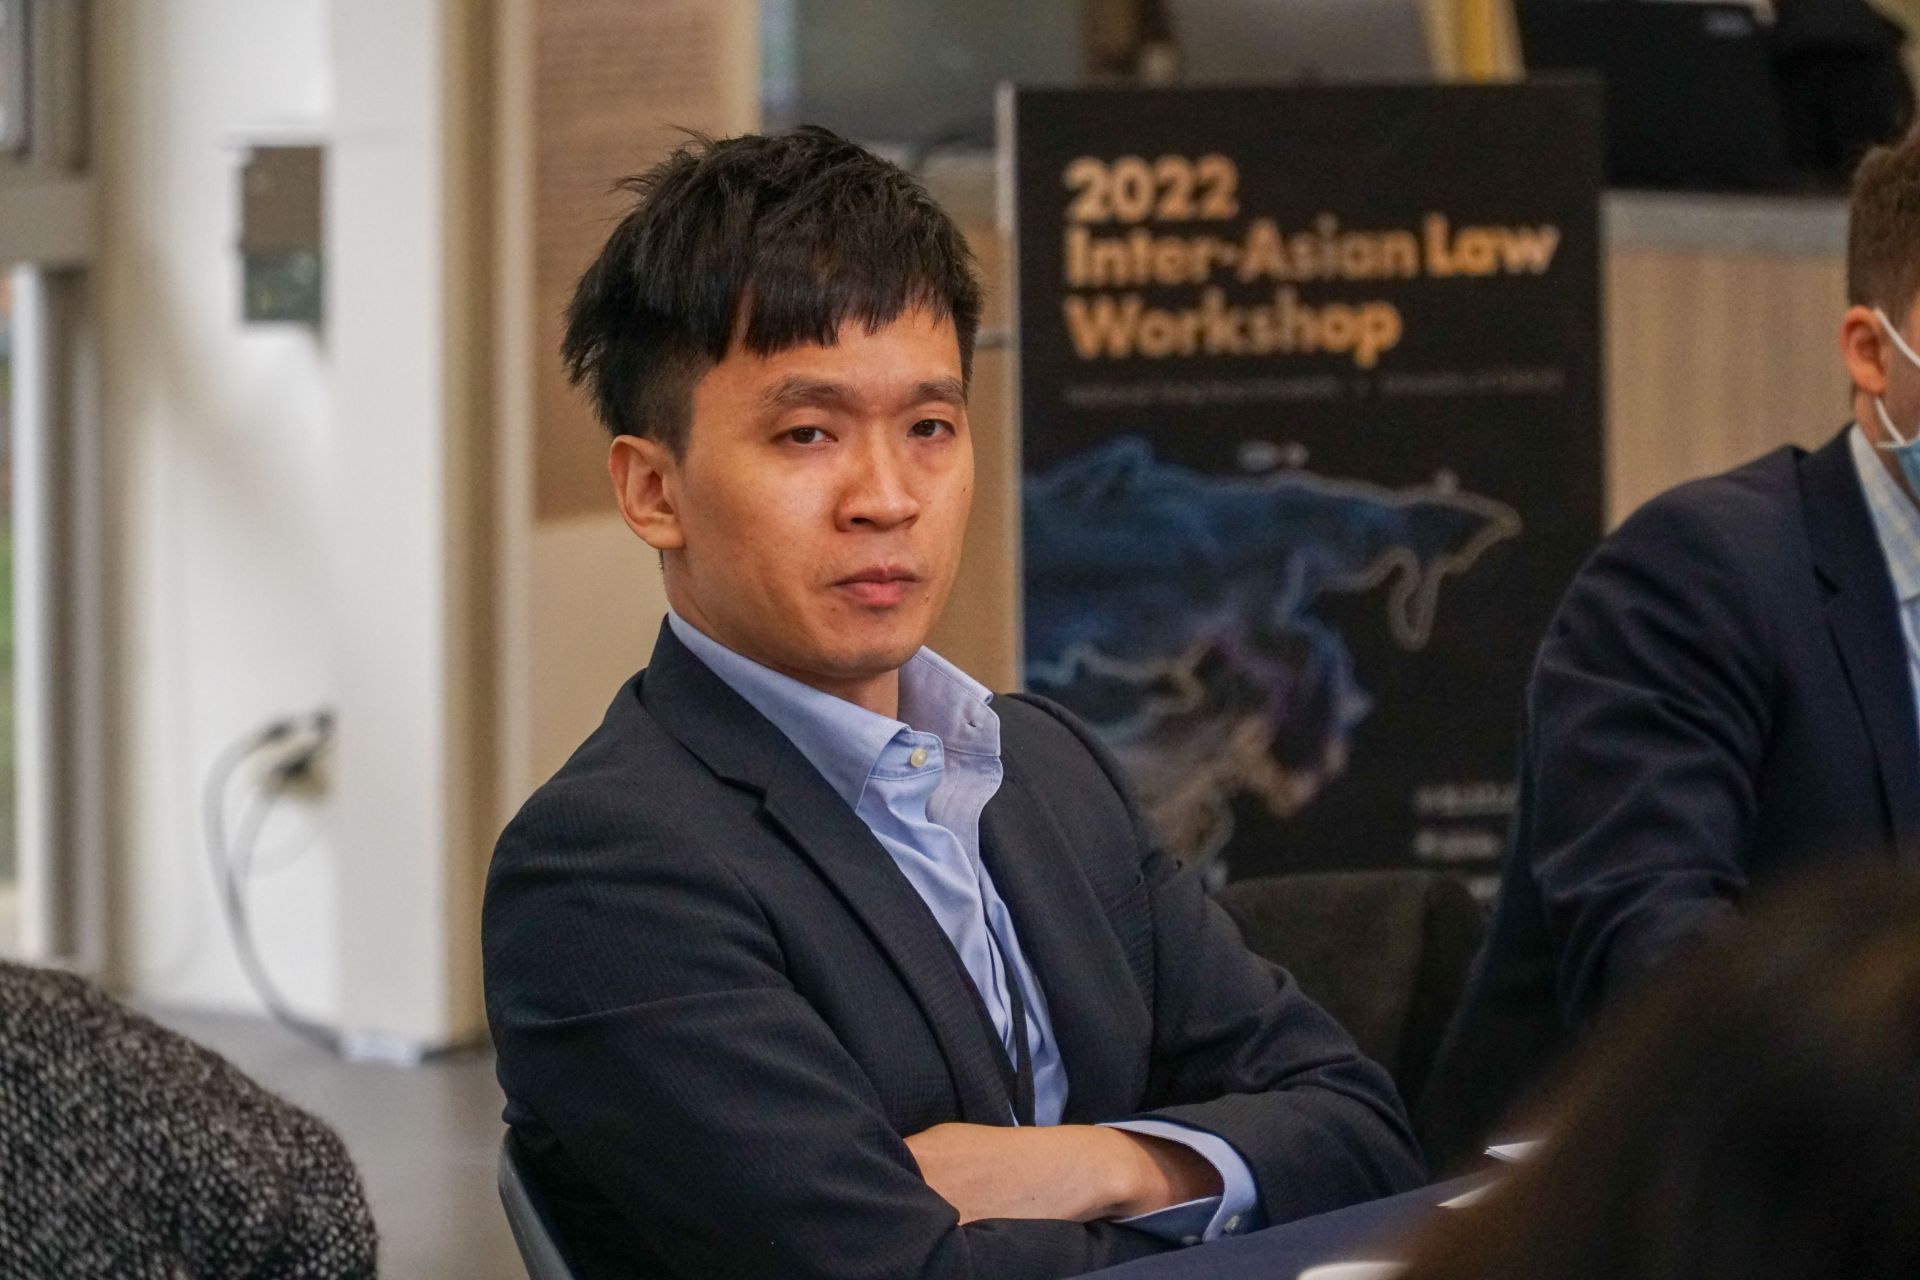 2022 Inter-Asian Law Workshop 亞際法研討會